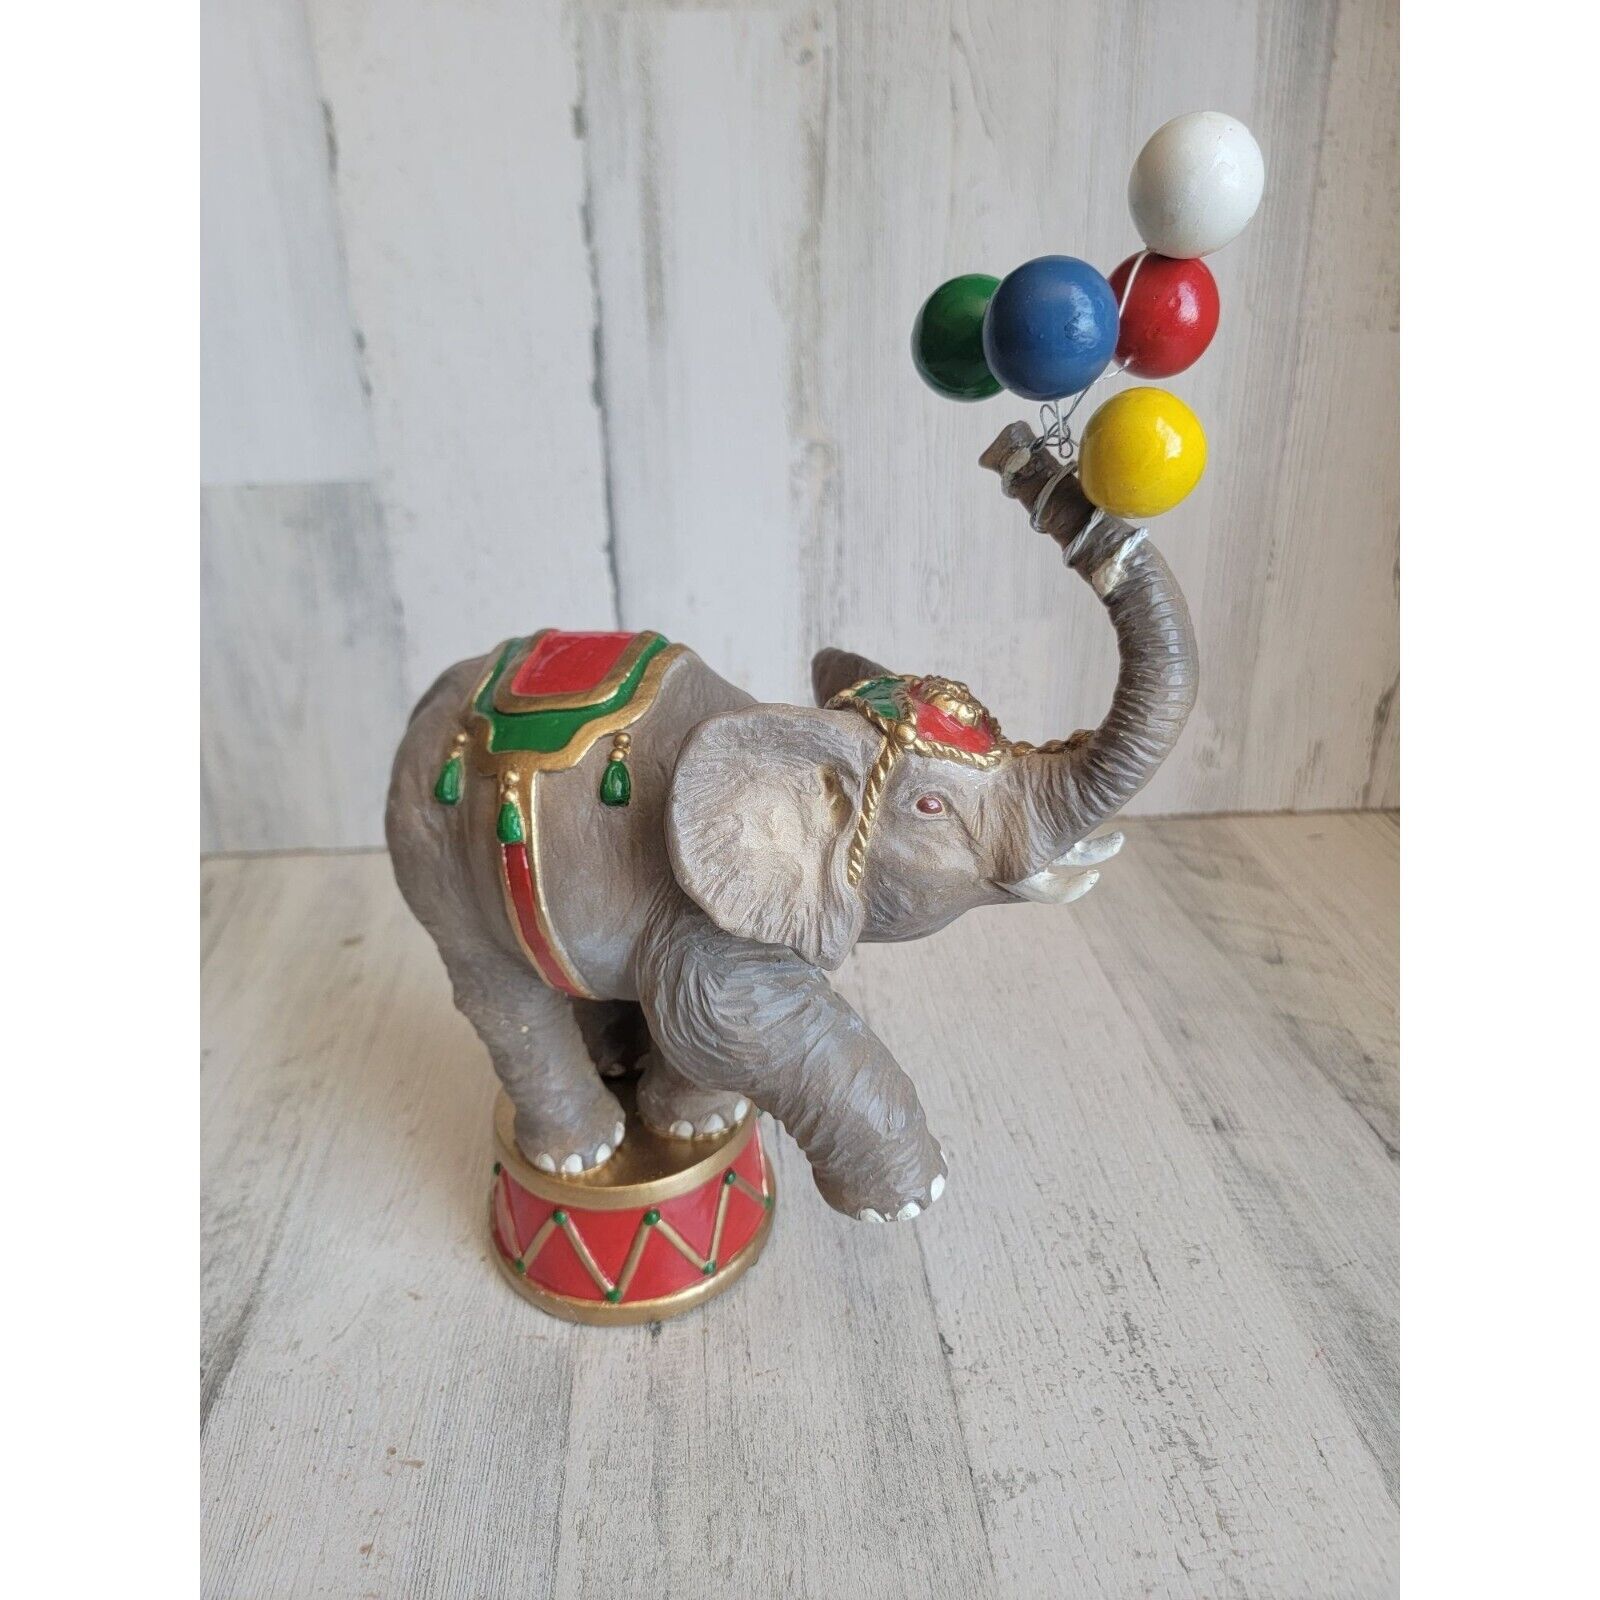 Vintage unique circus elephant balloon wind up music box figure